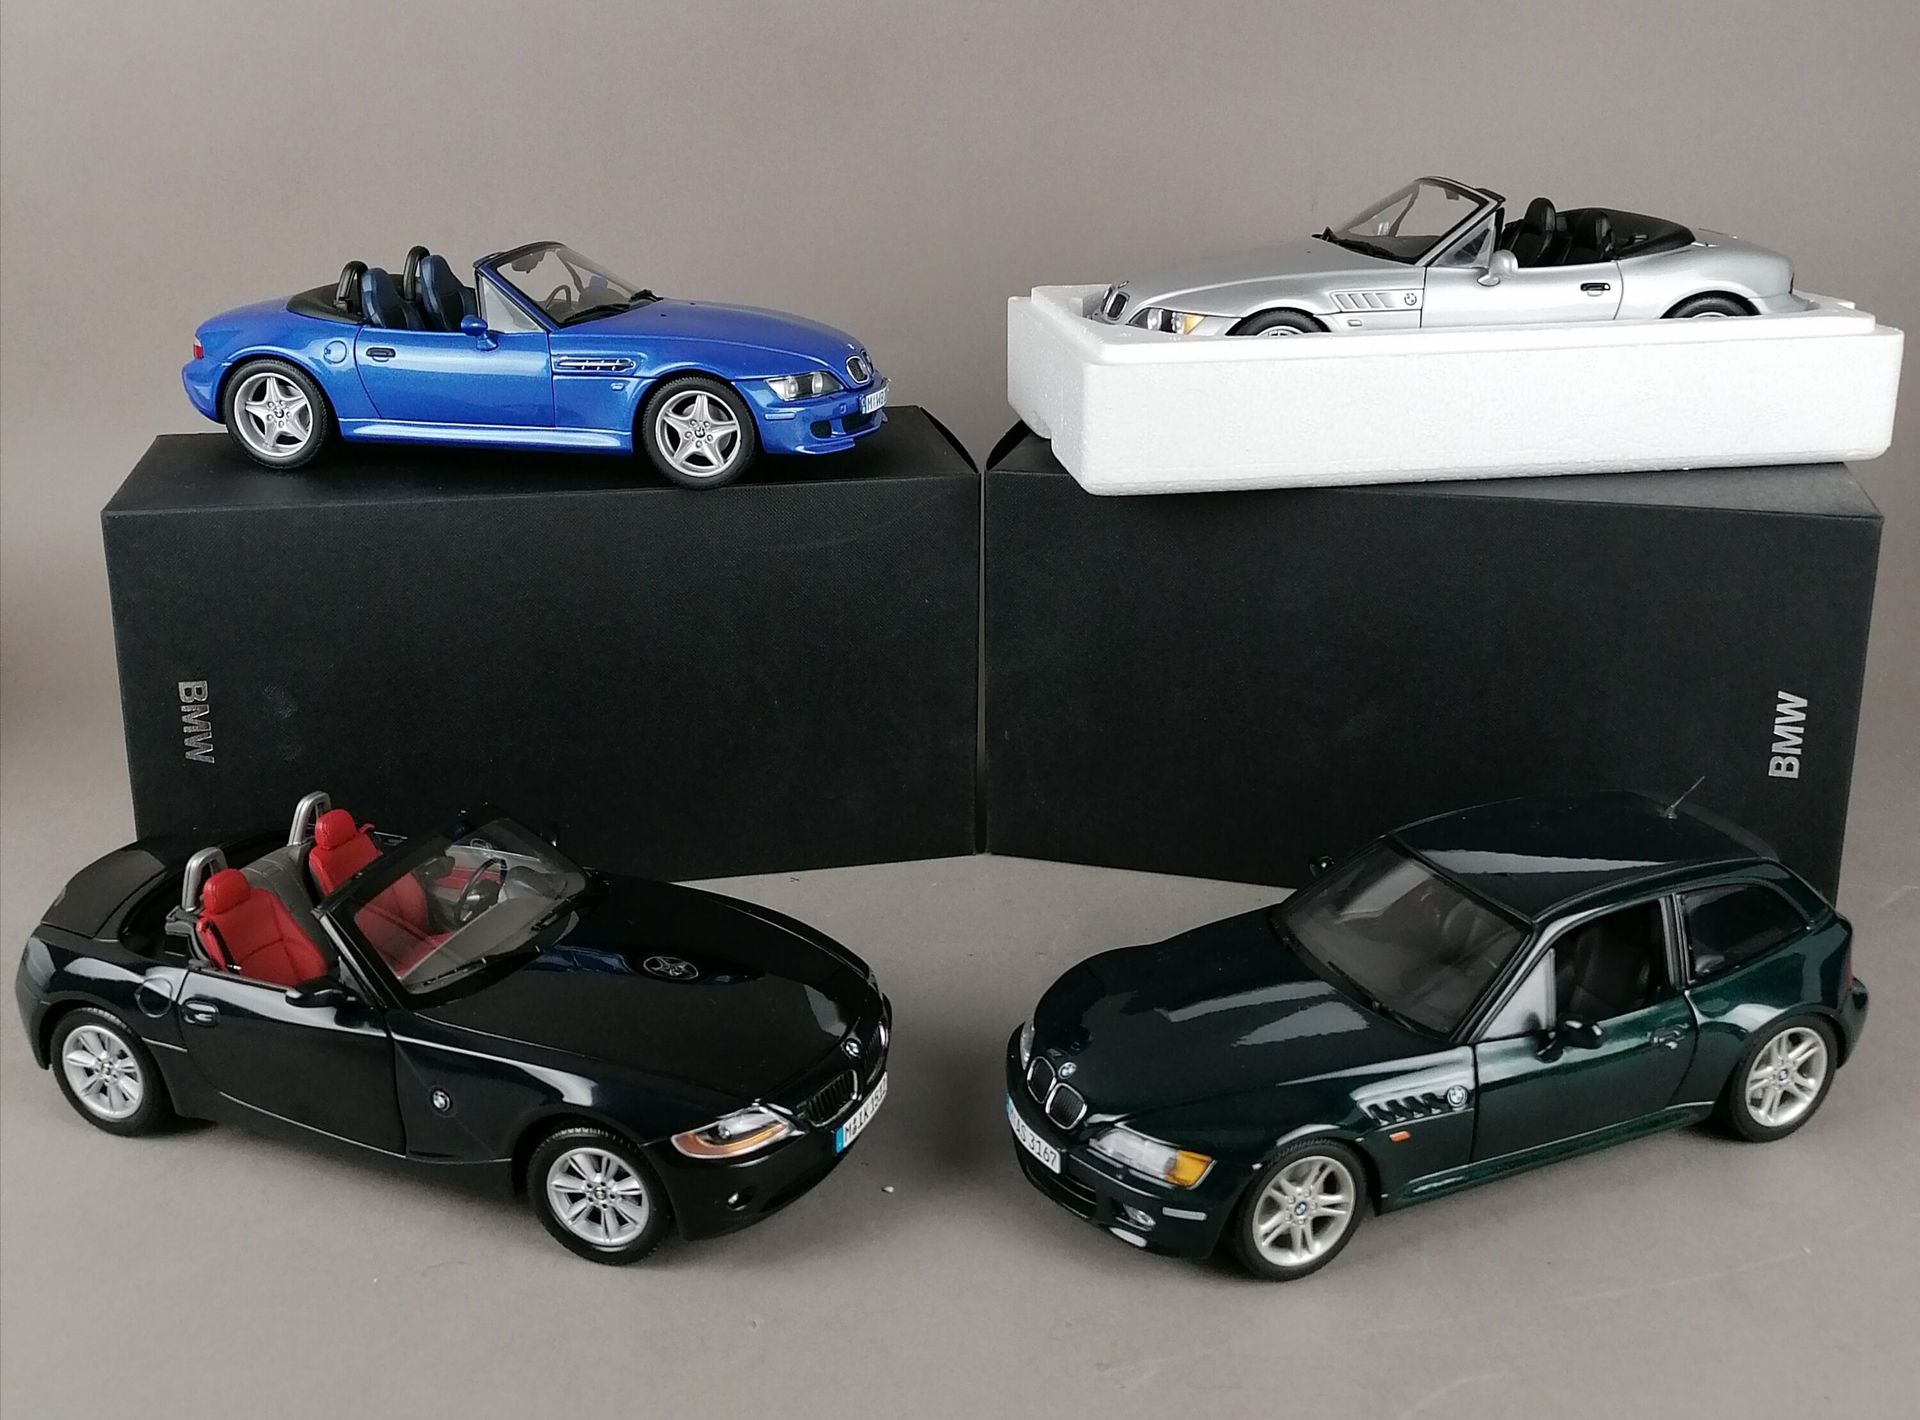 Null BMW - CUATRO BMW en escala 1/18:

1x M Roadster

1x Z3 Roadster 1.8

1x M C&hellip;